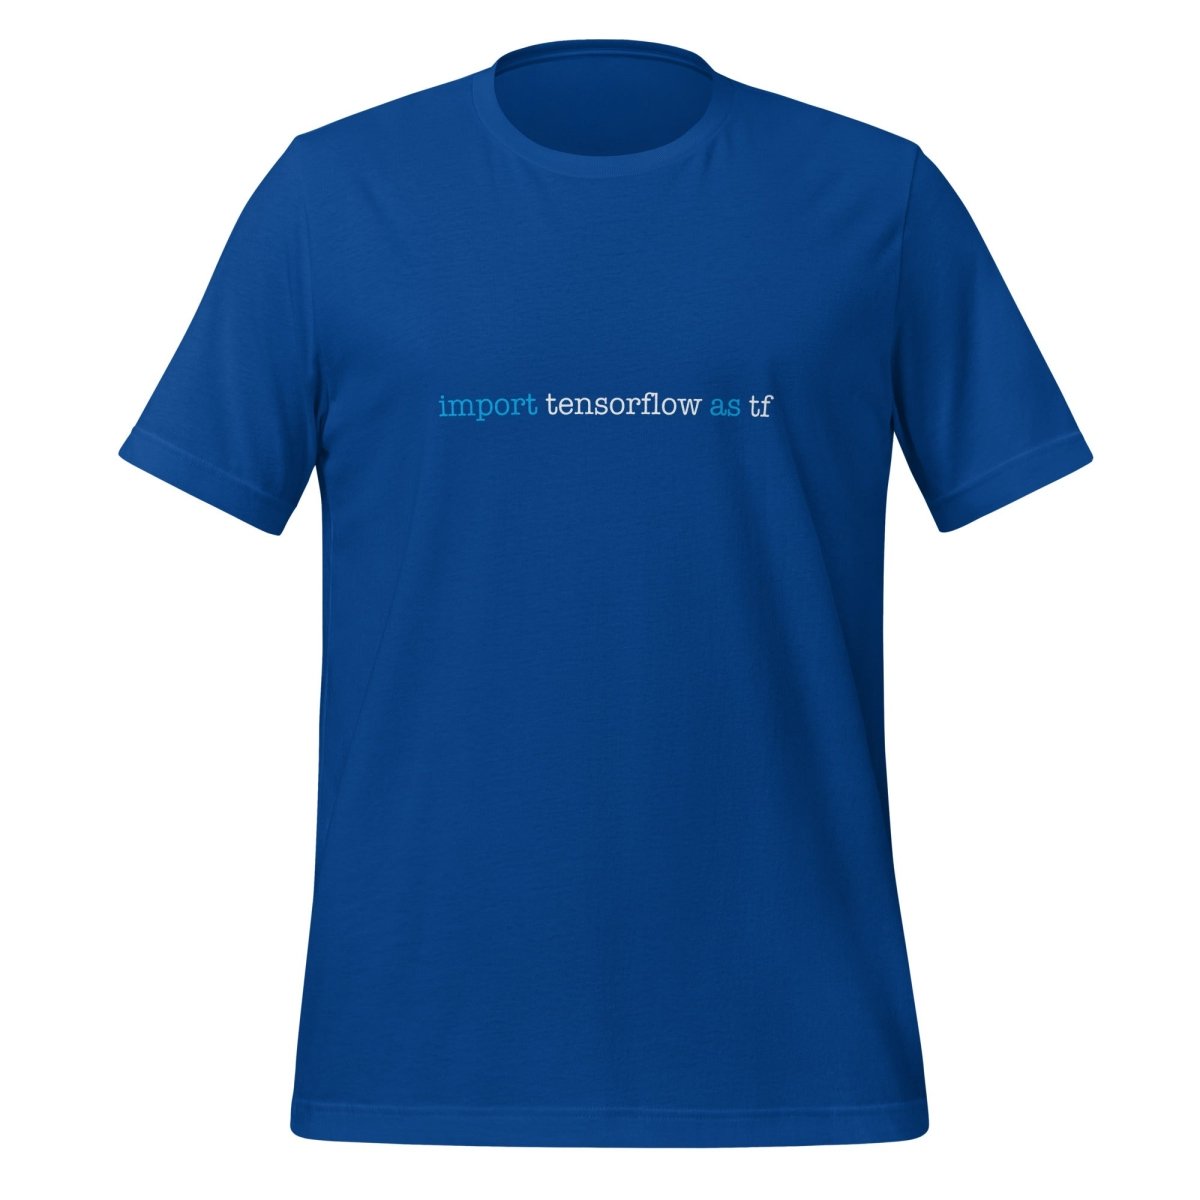 import tensorflow as tf T - Shirt 1 (unisex) - True Royal - AI Store